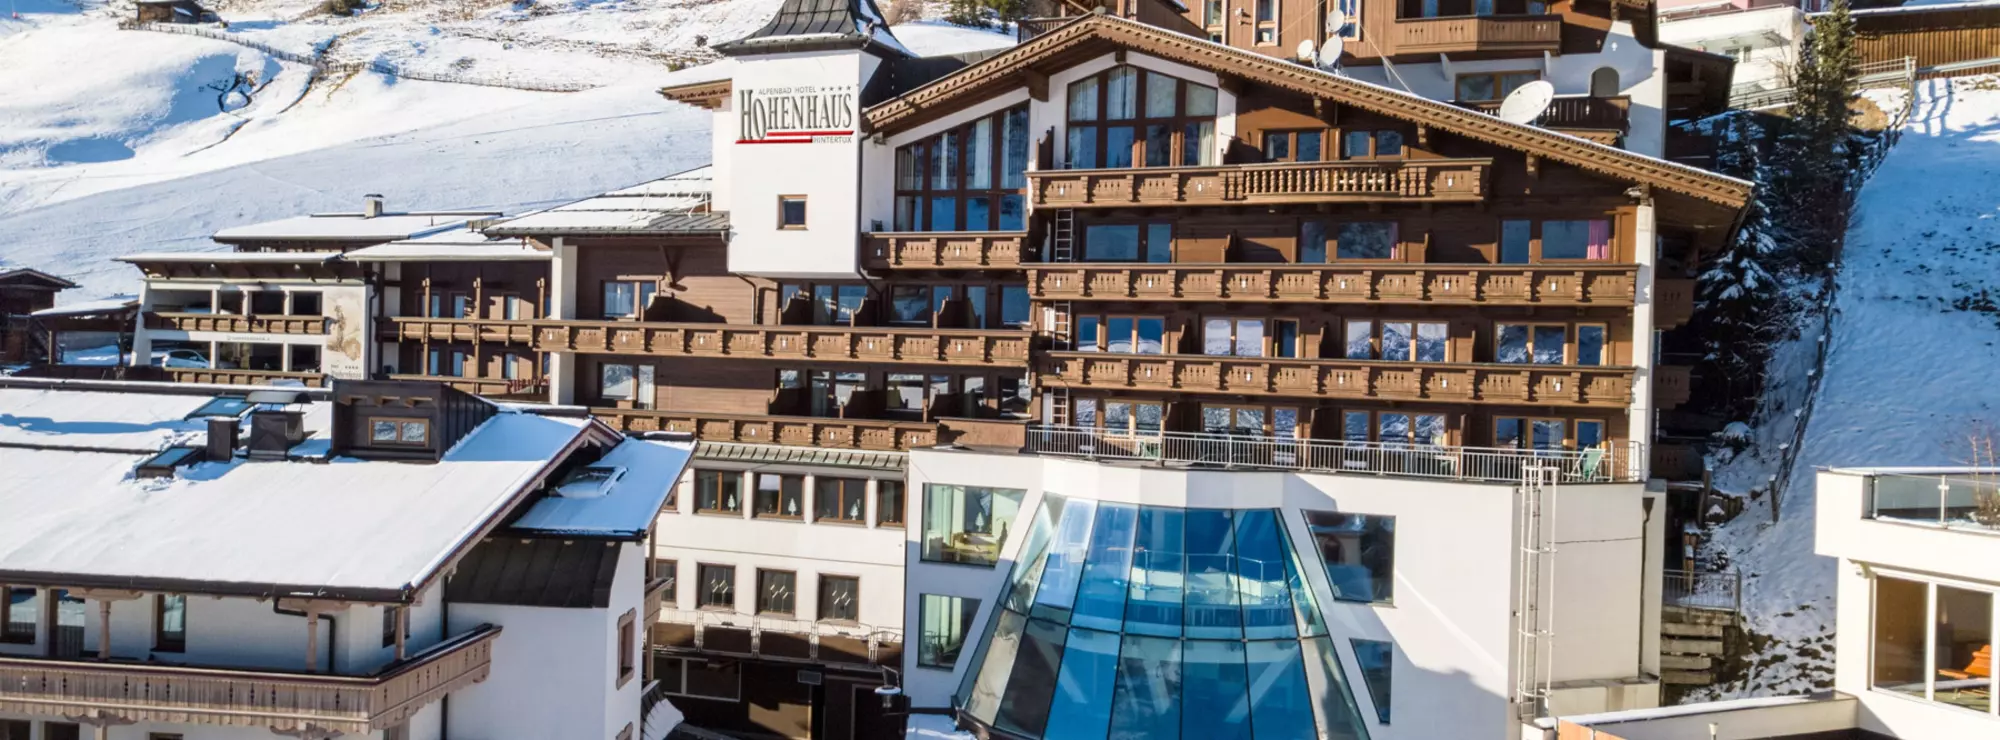 Alpenbad Hotel Hohenhaus in Hintertux im Winter